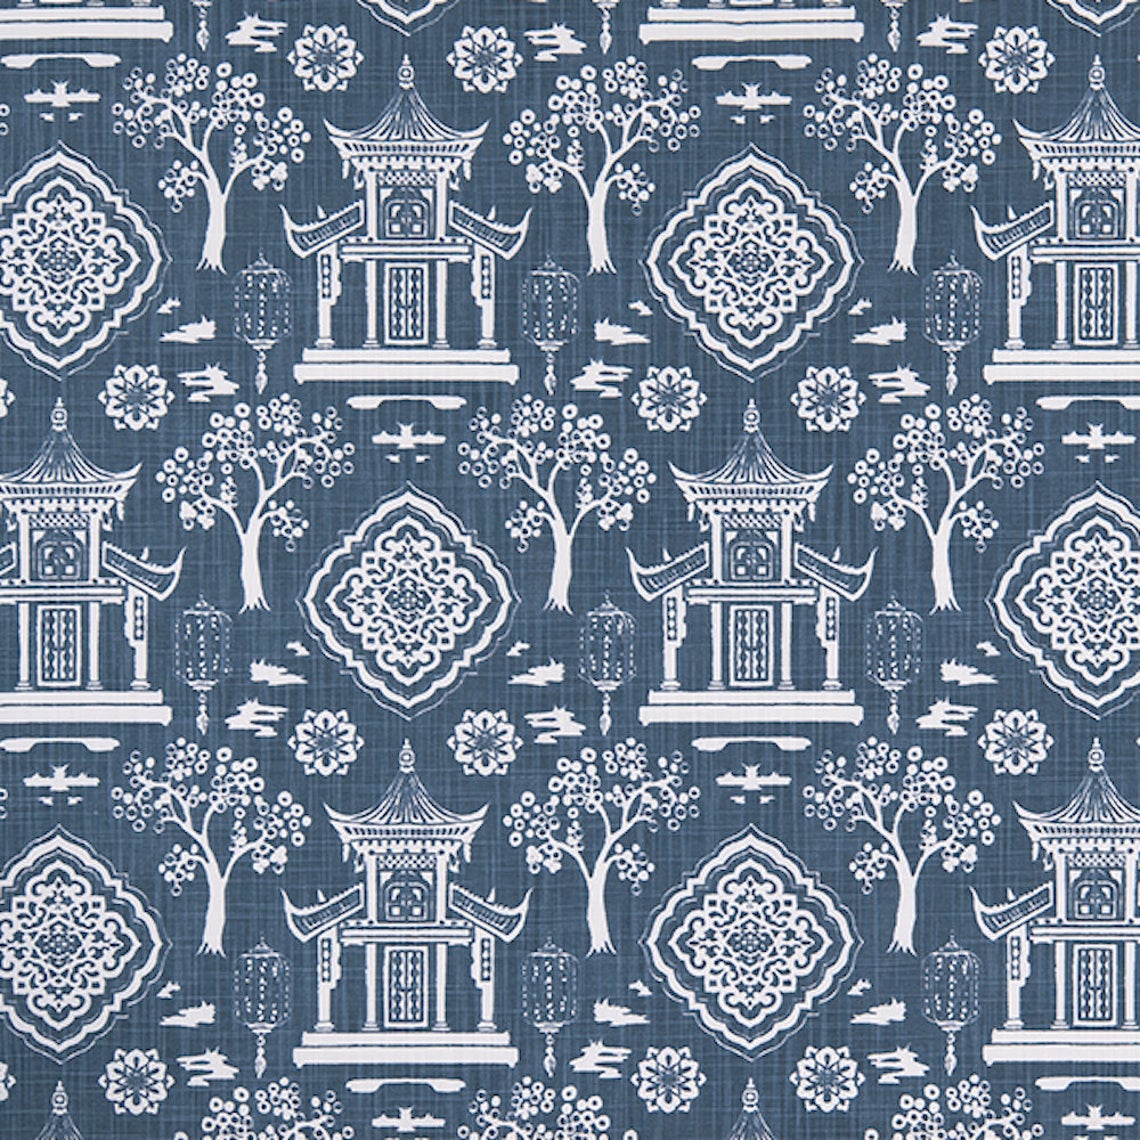 pinch pleated curtain panels pair in spirit regal navy blue oriental toile